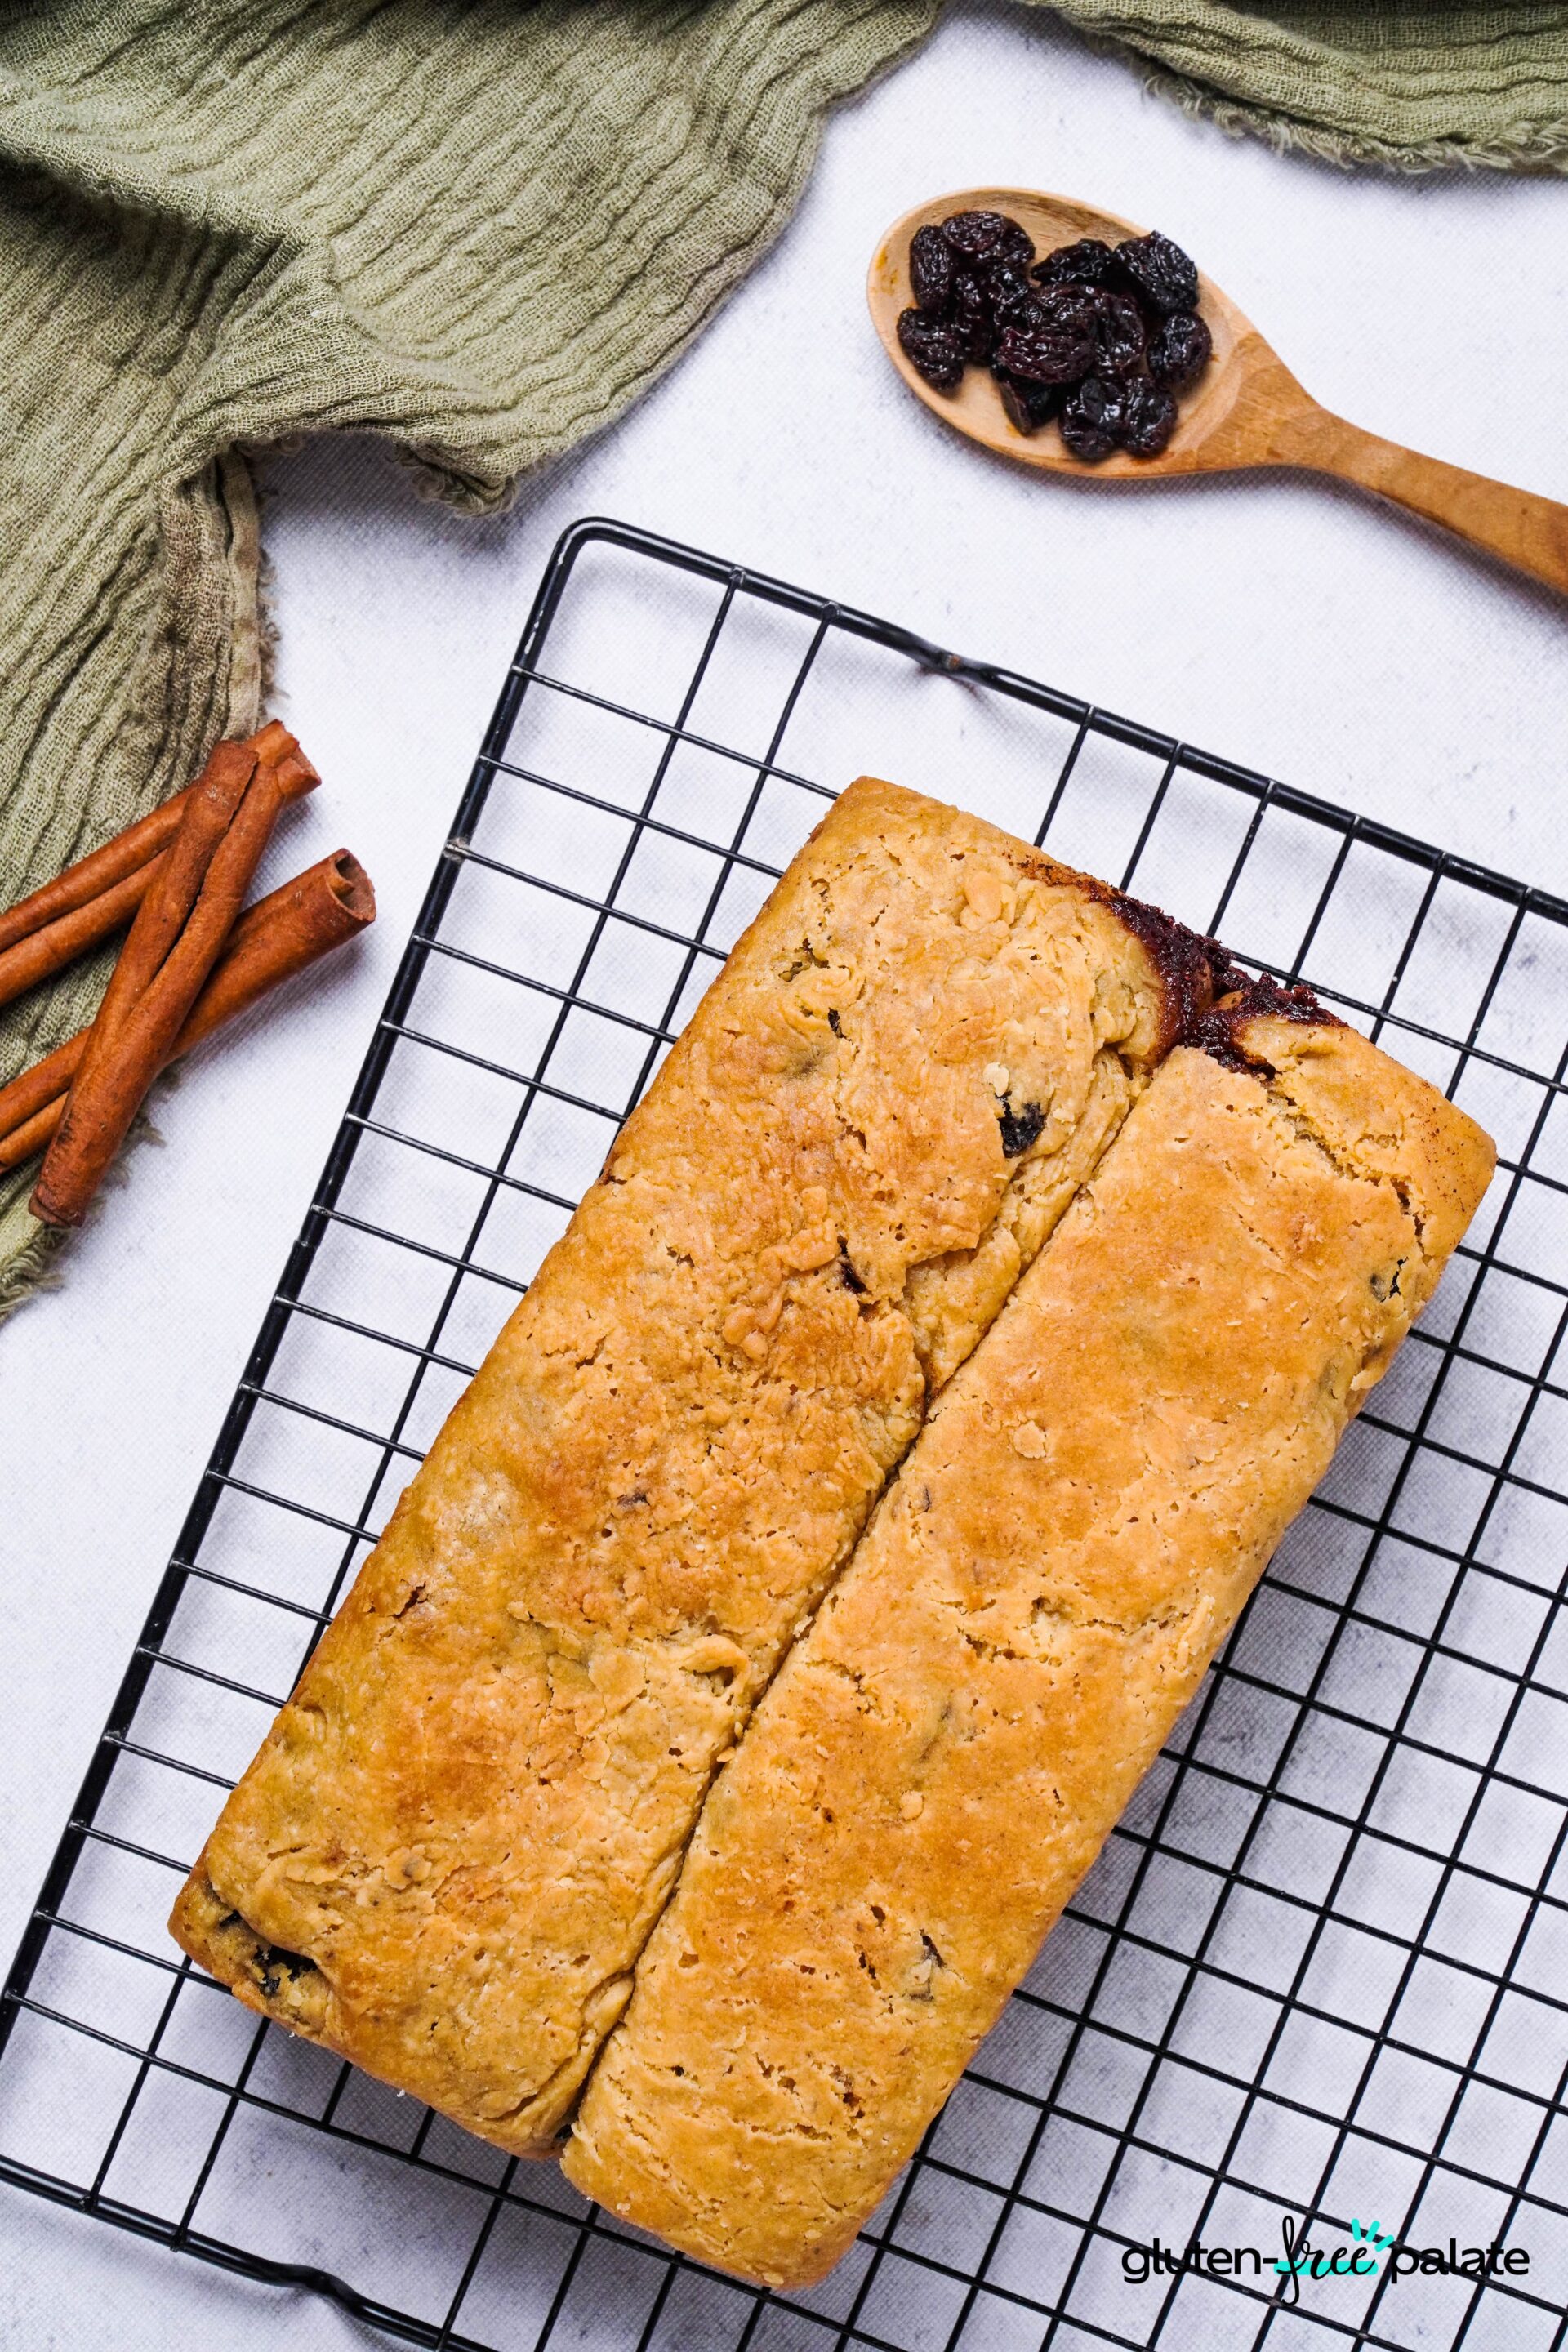 Gluten-free cinnamon raisin bread on a cooling rack.